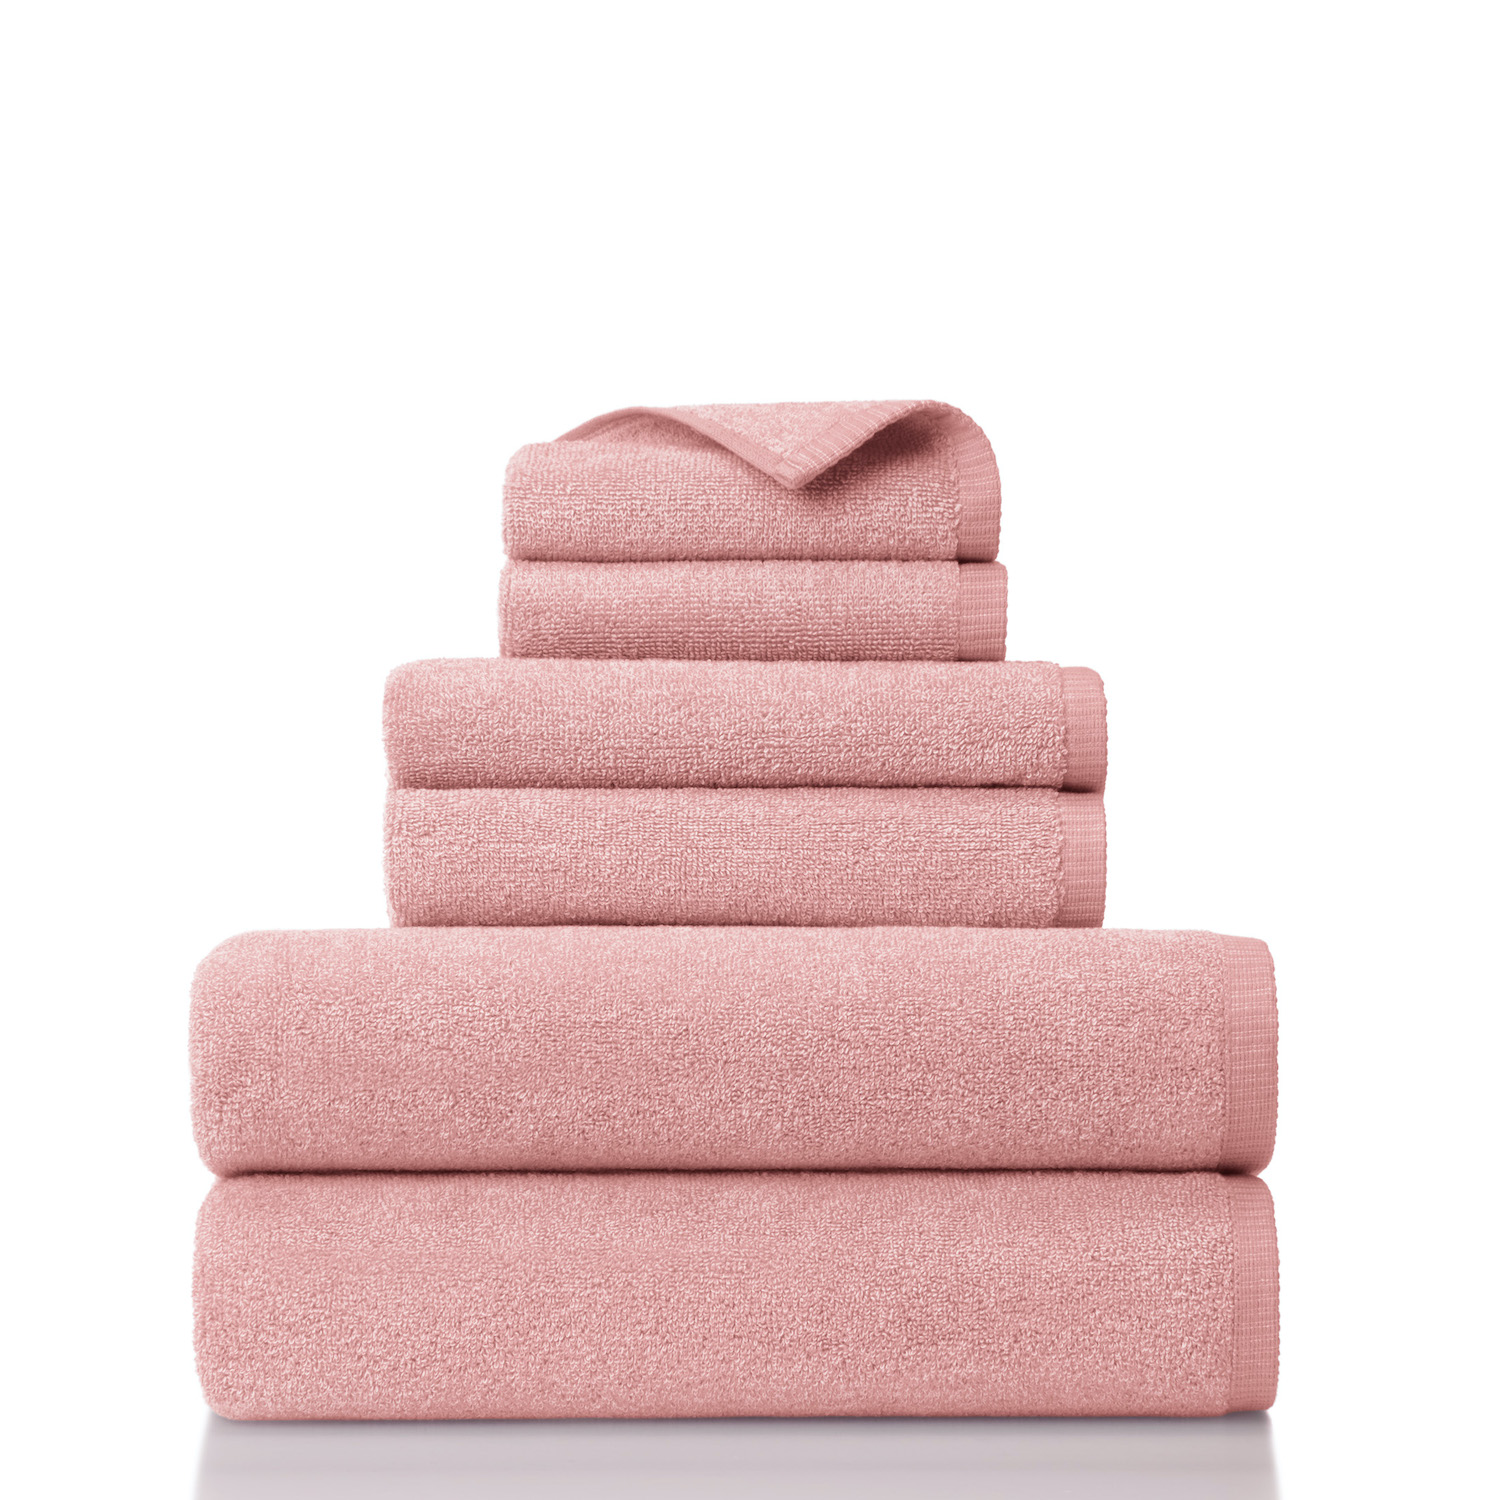 Gap Home Melange Organic Cotton 6-Piece Bath Towel Set, Blush